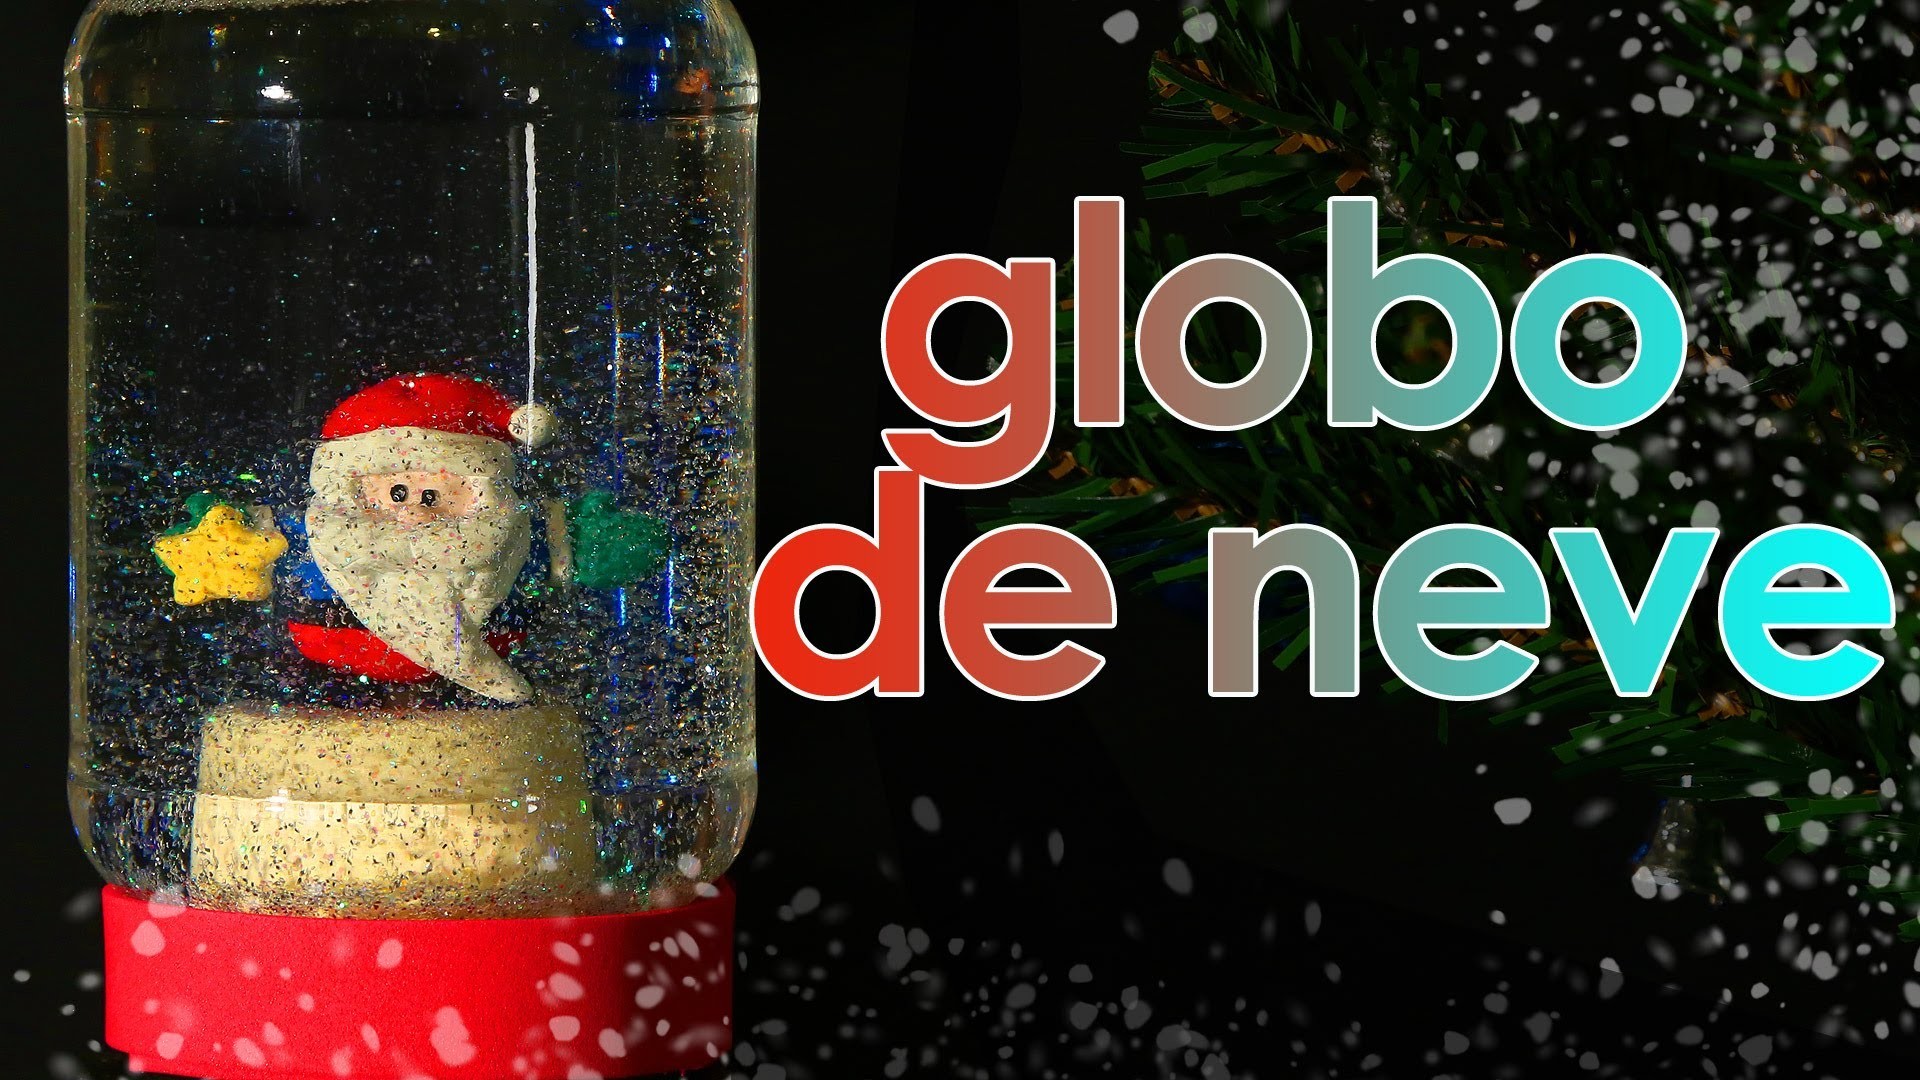 Globo de neve de Natal (globo de neve com glicerina e glitter) (artesanato)